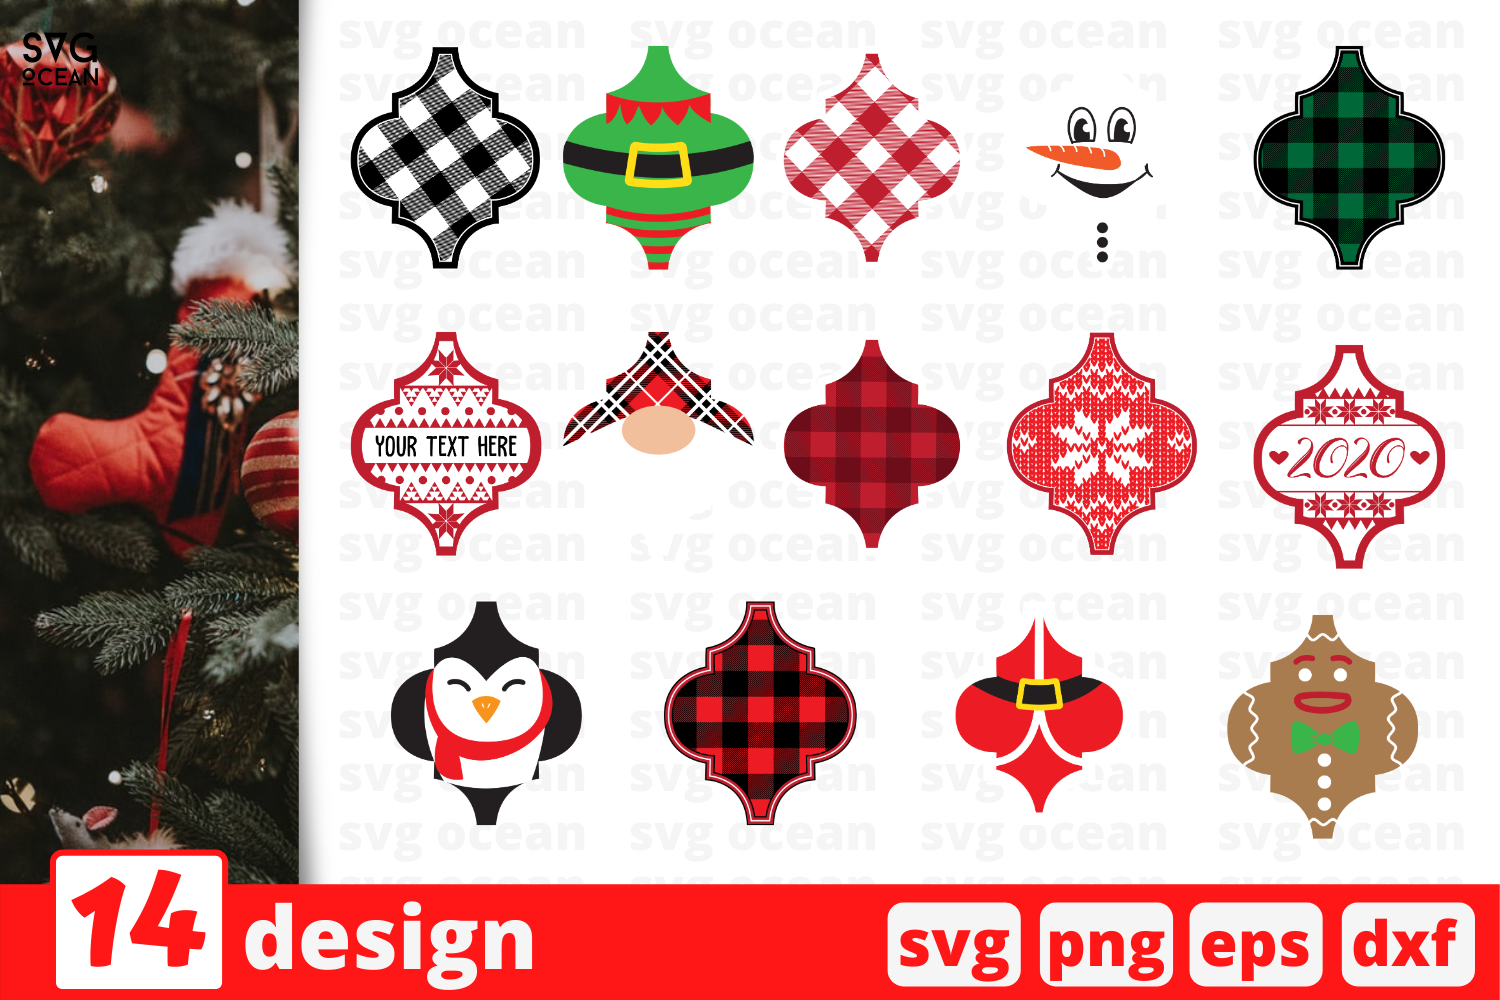 Arabesque Tile Christmas Ornament Bundle Graphic By Svgocean Creative Fabrica